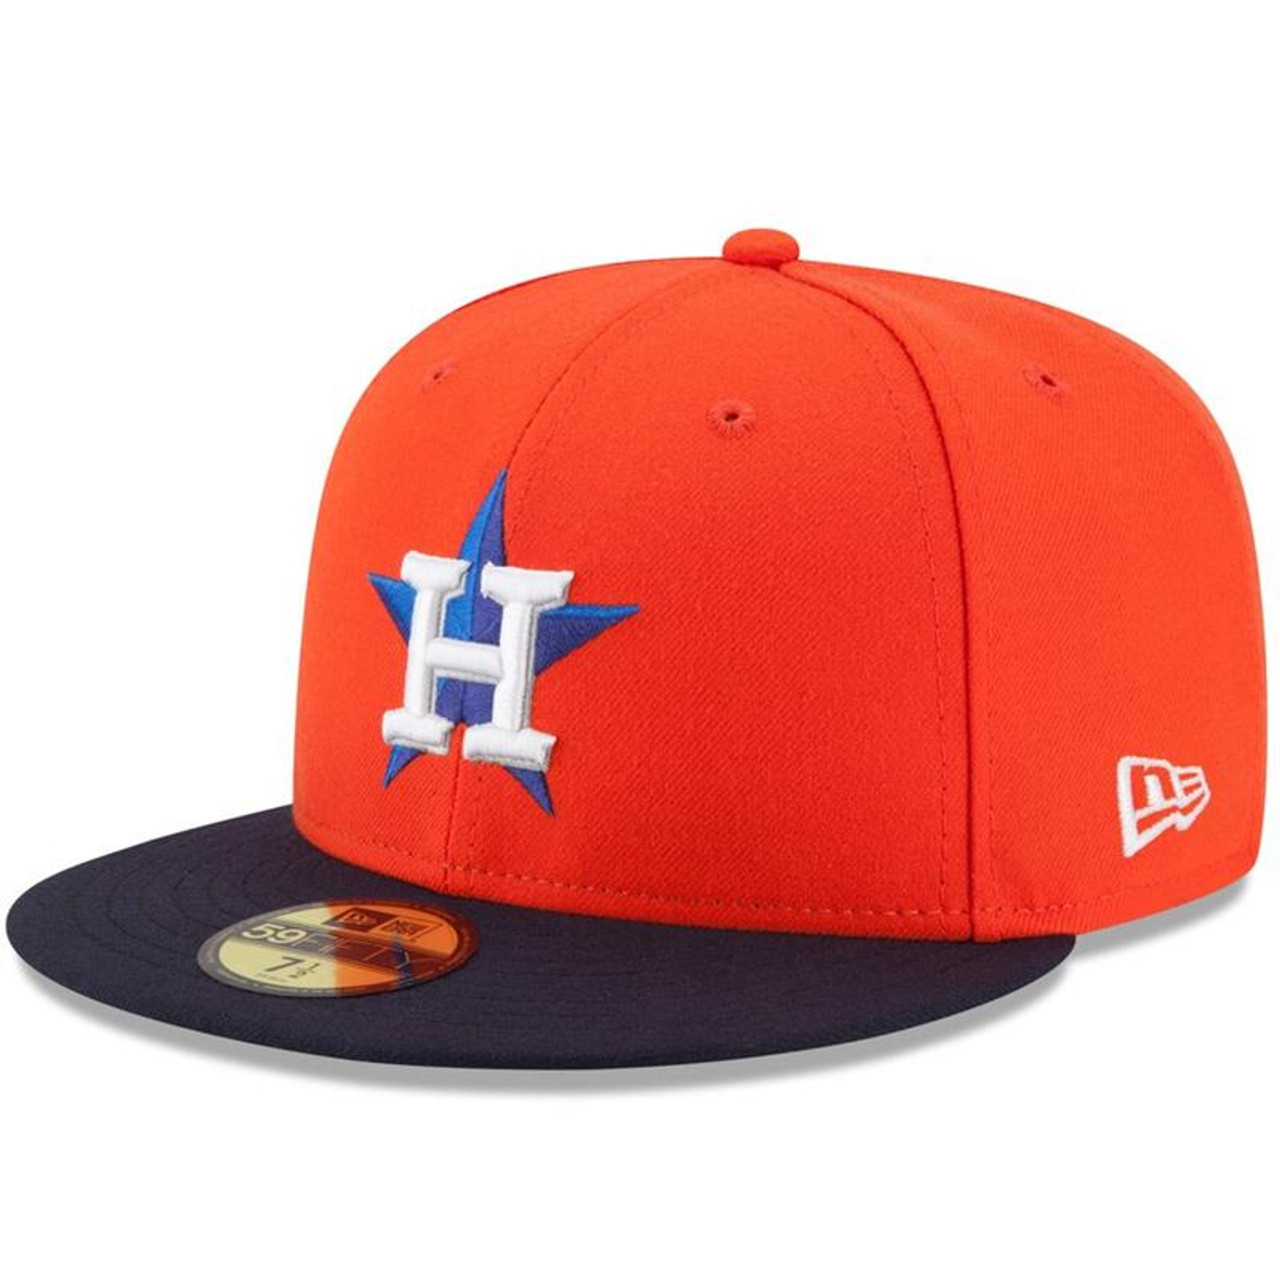 Detroit Tigers Orange-Orange 59FIFTY Fitted Hat by New Era